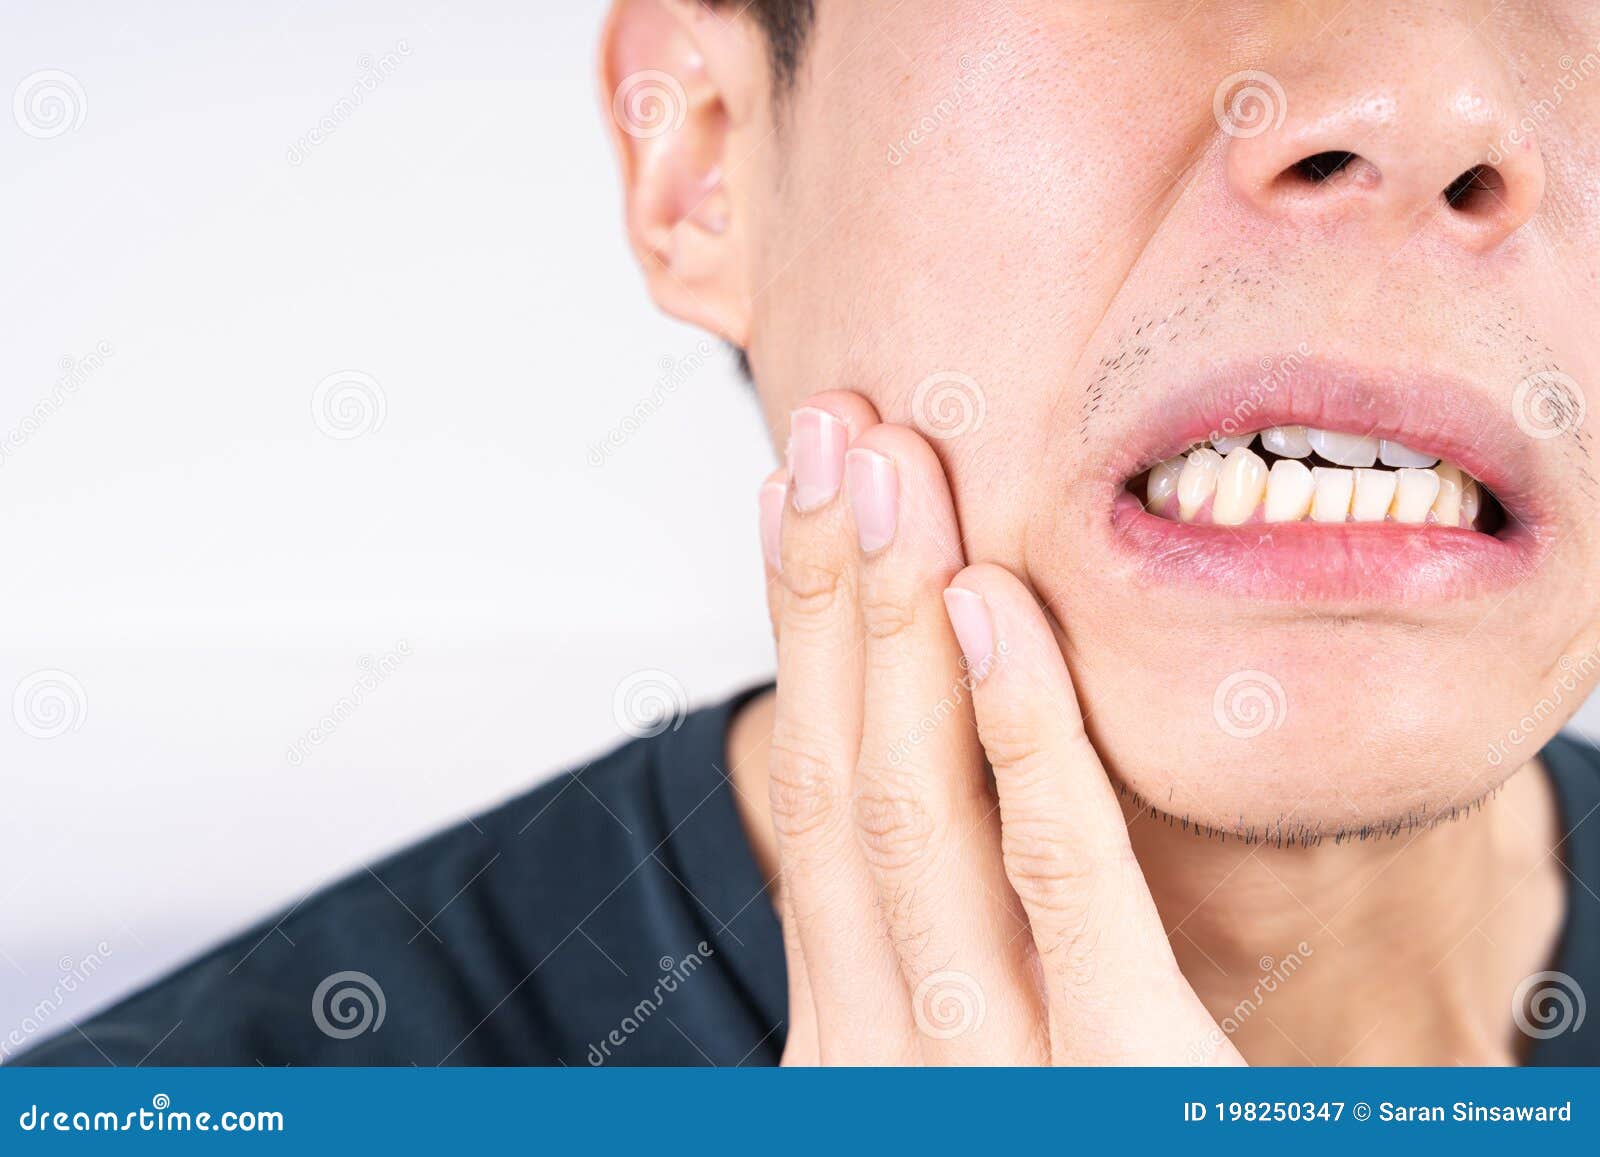 Toothache In Wisdom Teeth